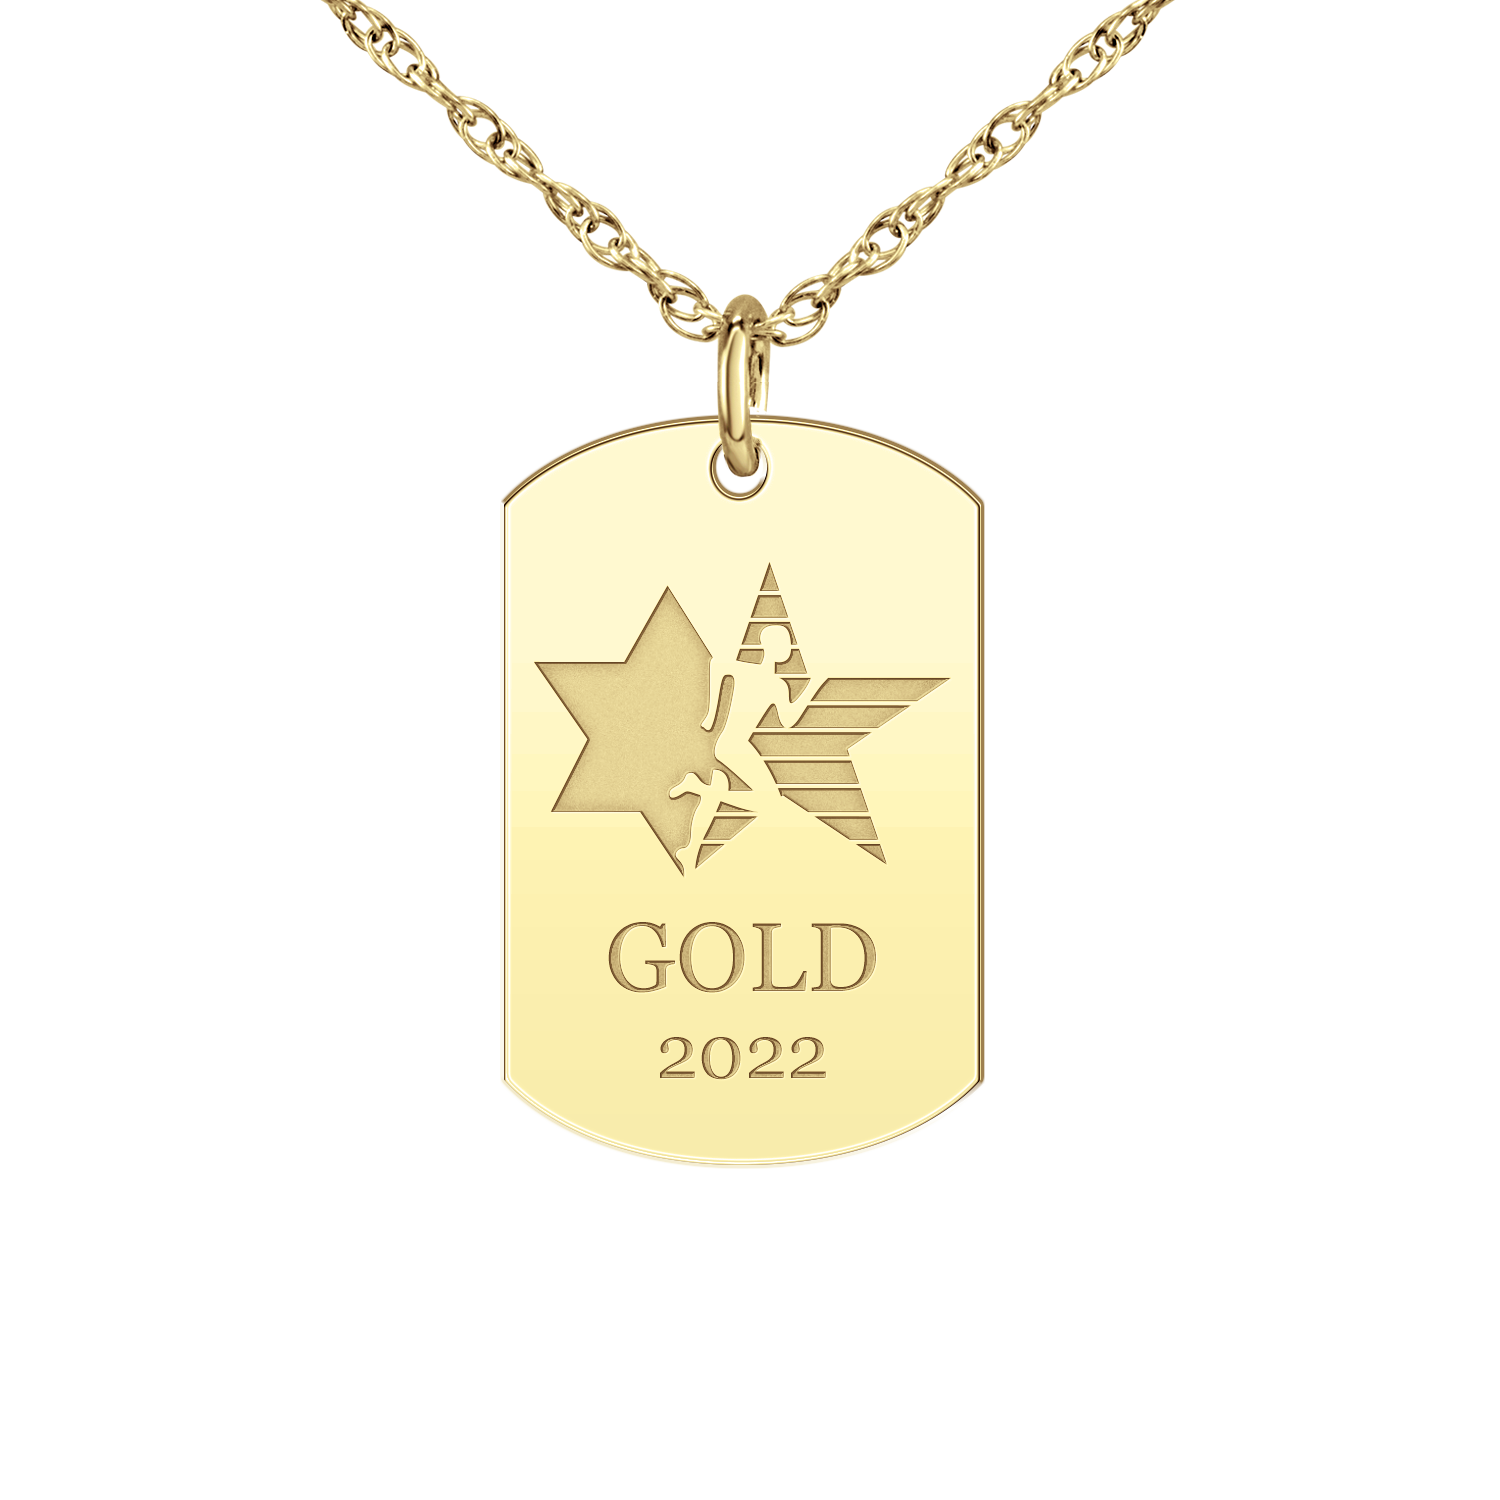 Maccabi GOLD Medal Tag